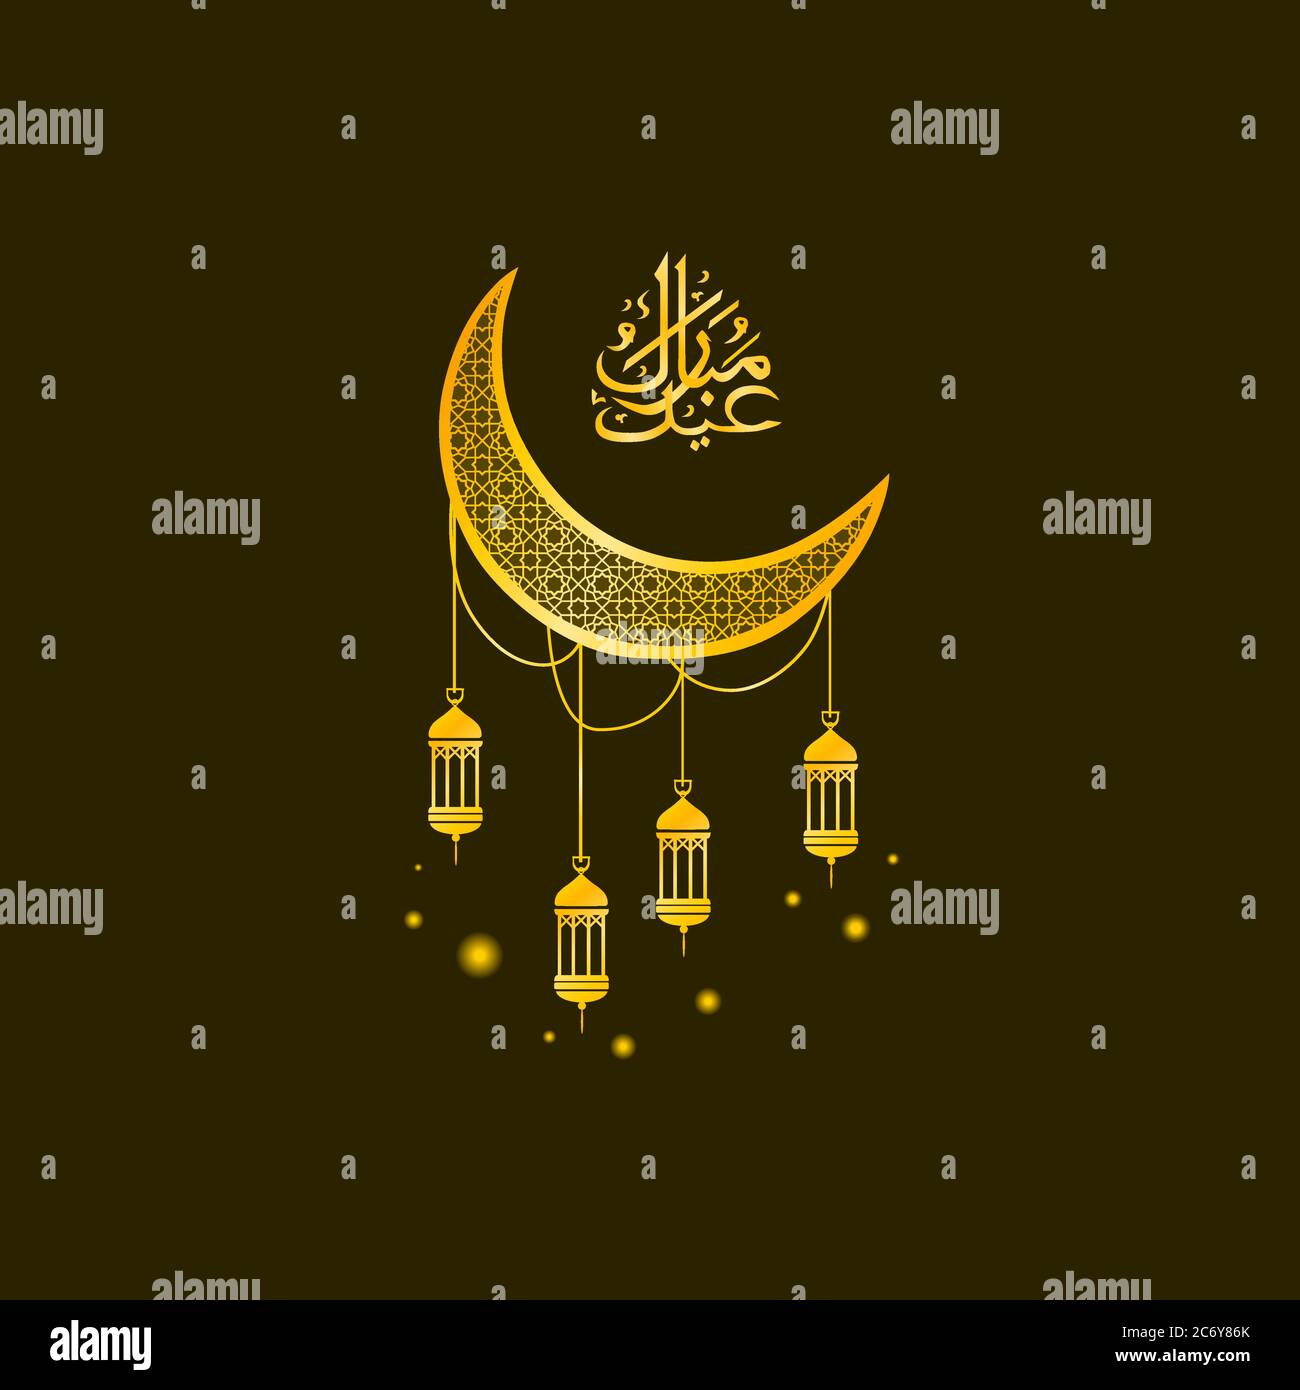 Eid Mubarak calligraphy illustration Stock Vector